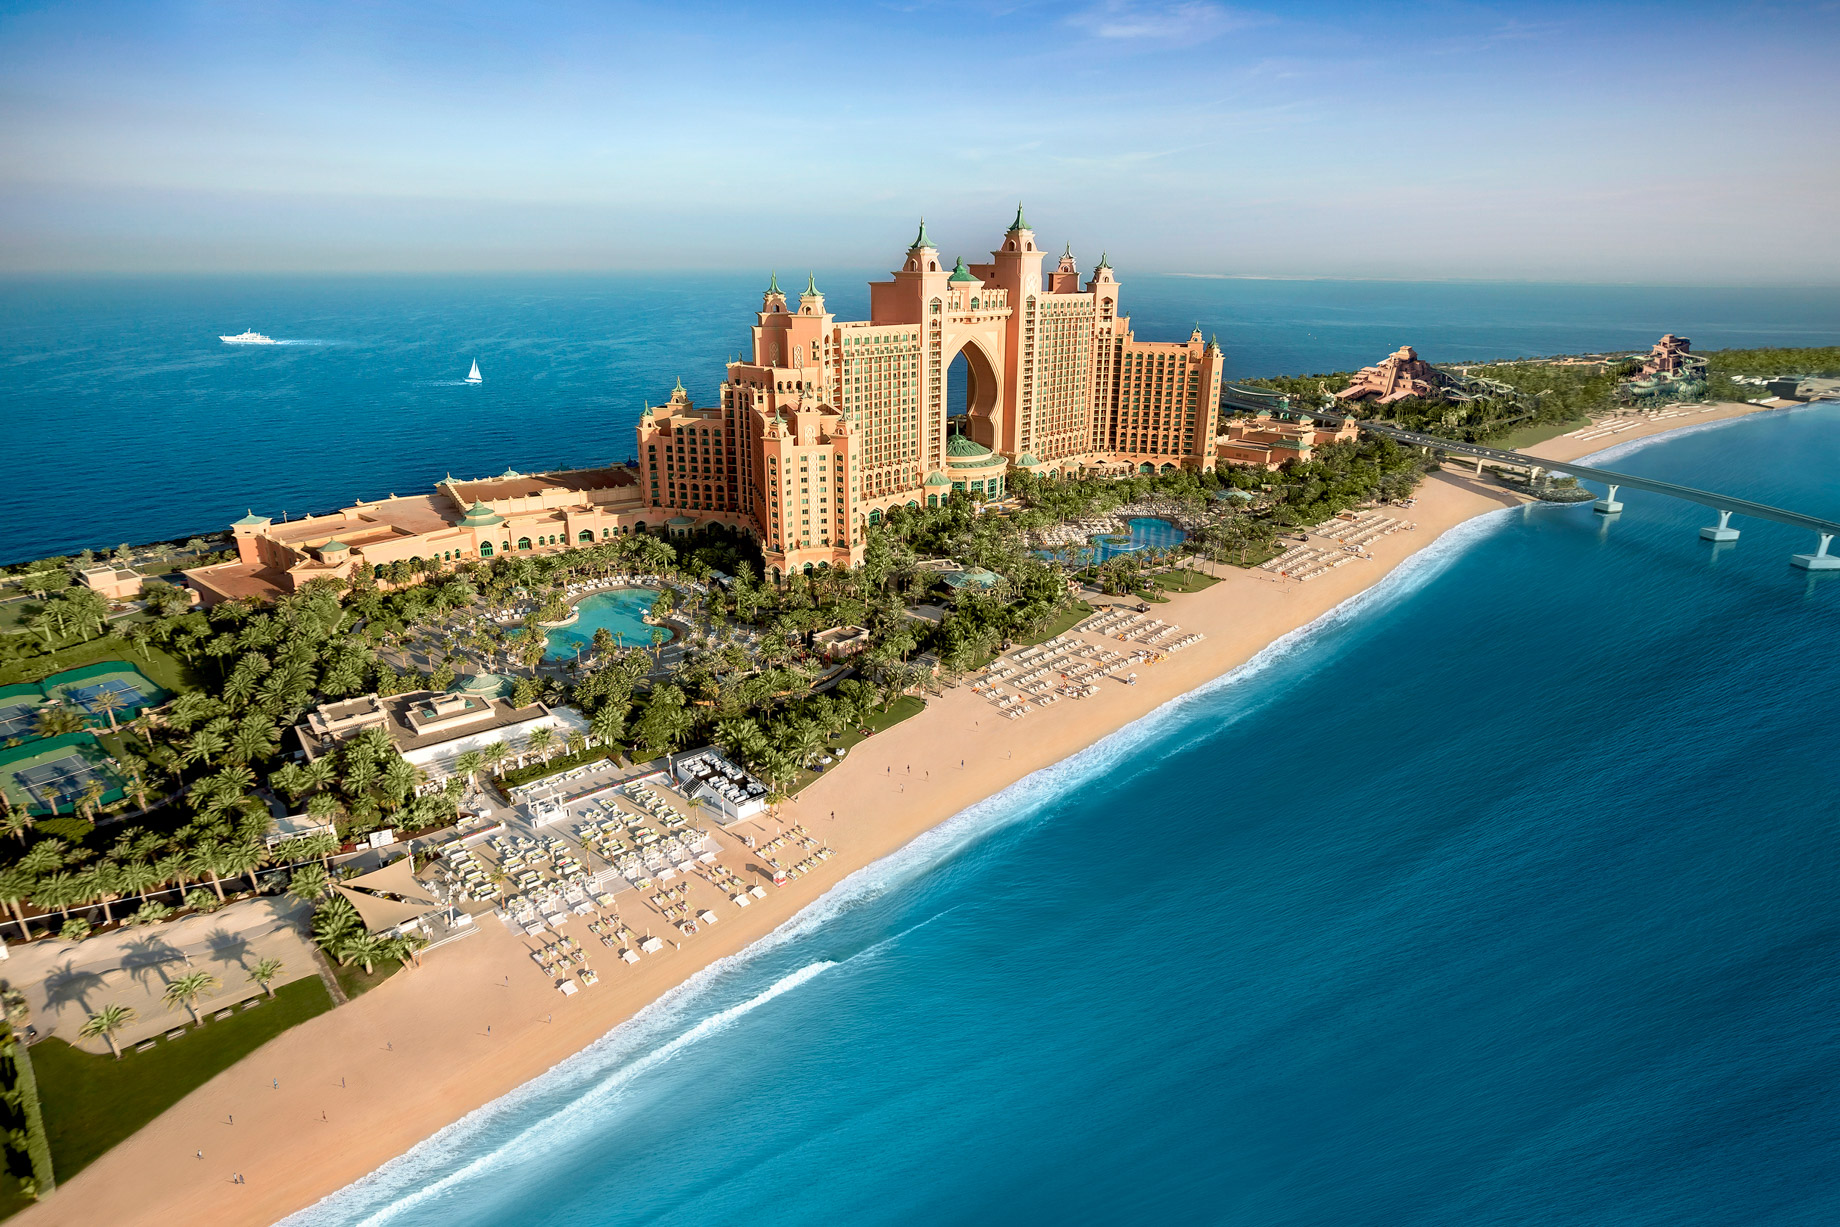 Atlantis The Palm Resort – Crescent Rd, Dubai, UAE – Hotel Aerial